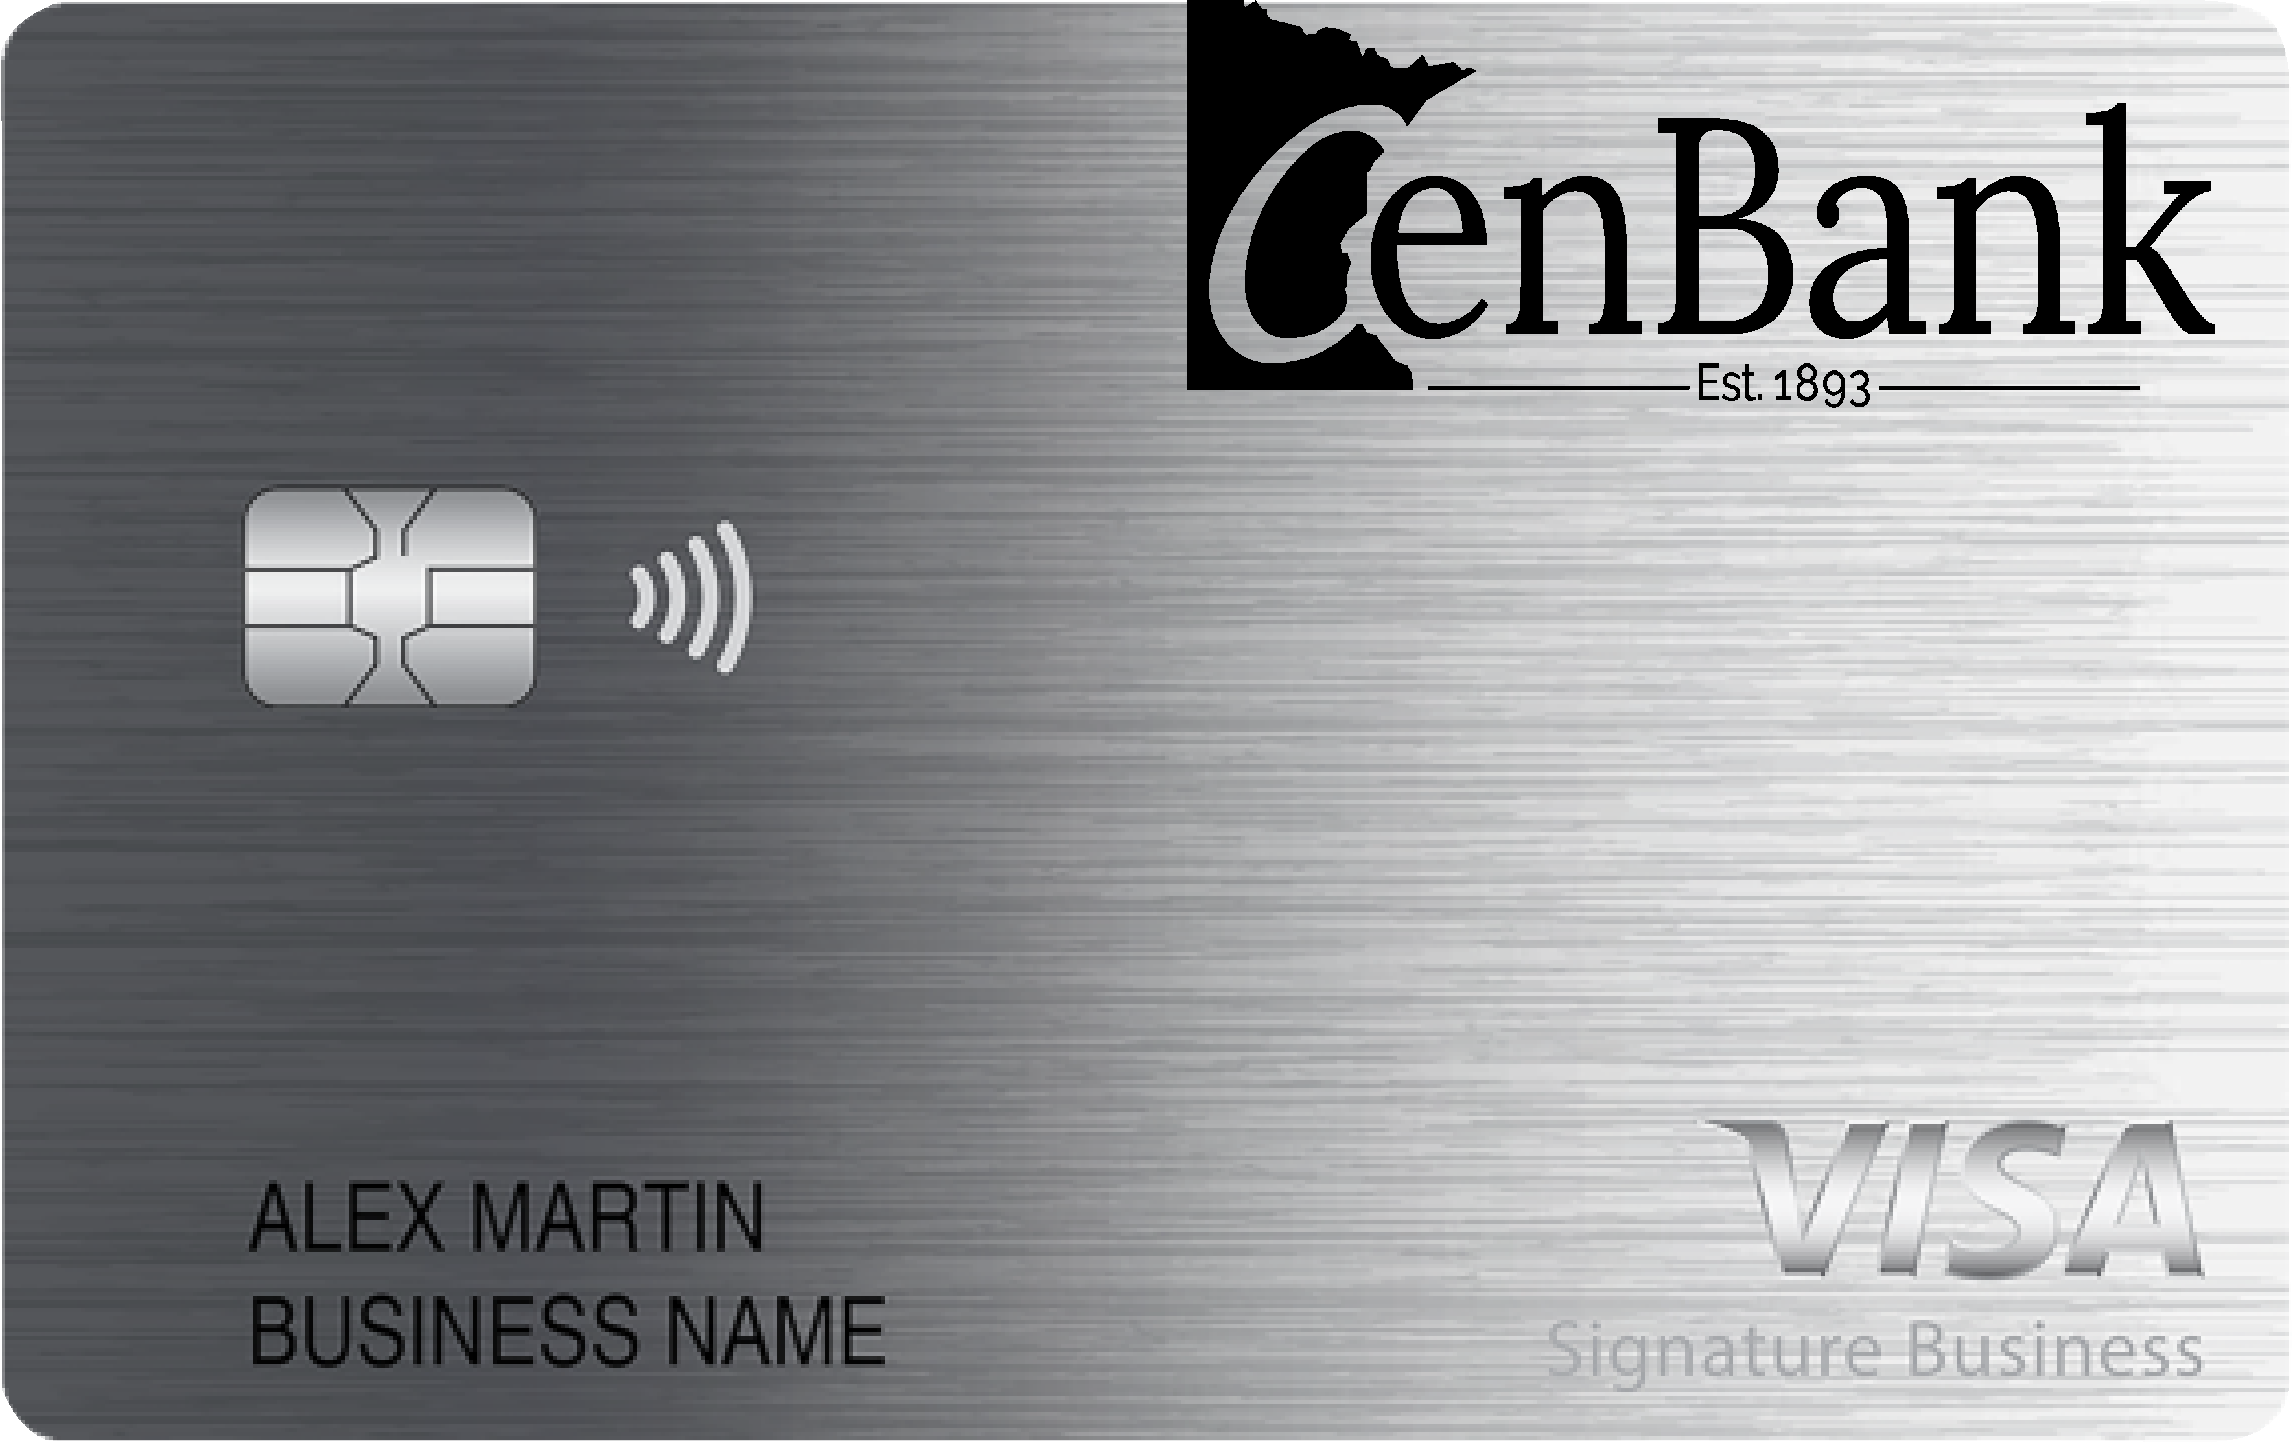 CenBank Smart Business Rewards Card